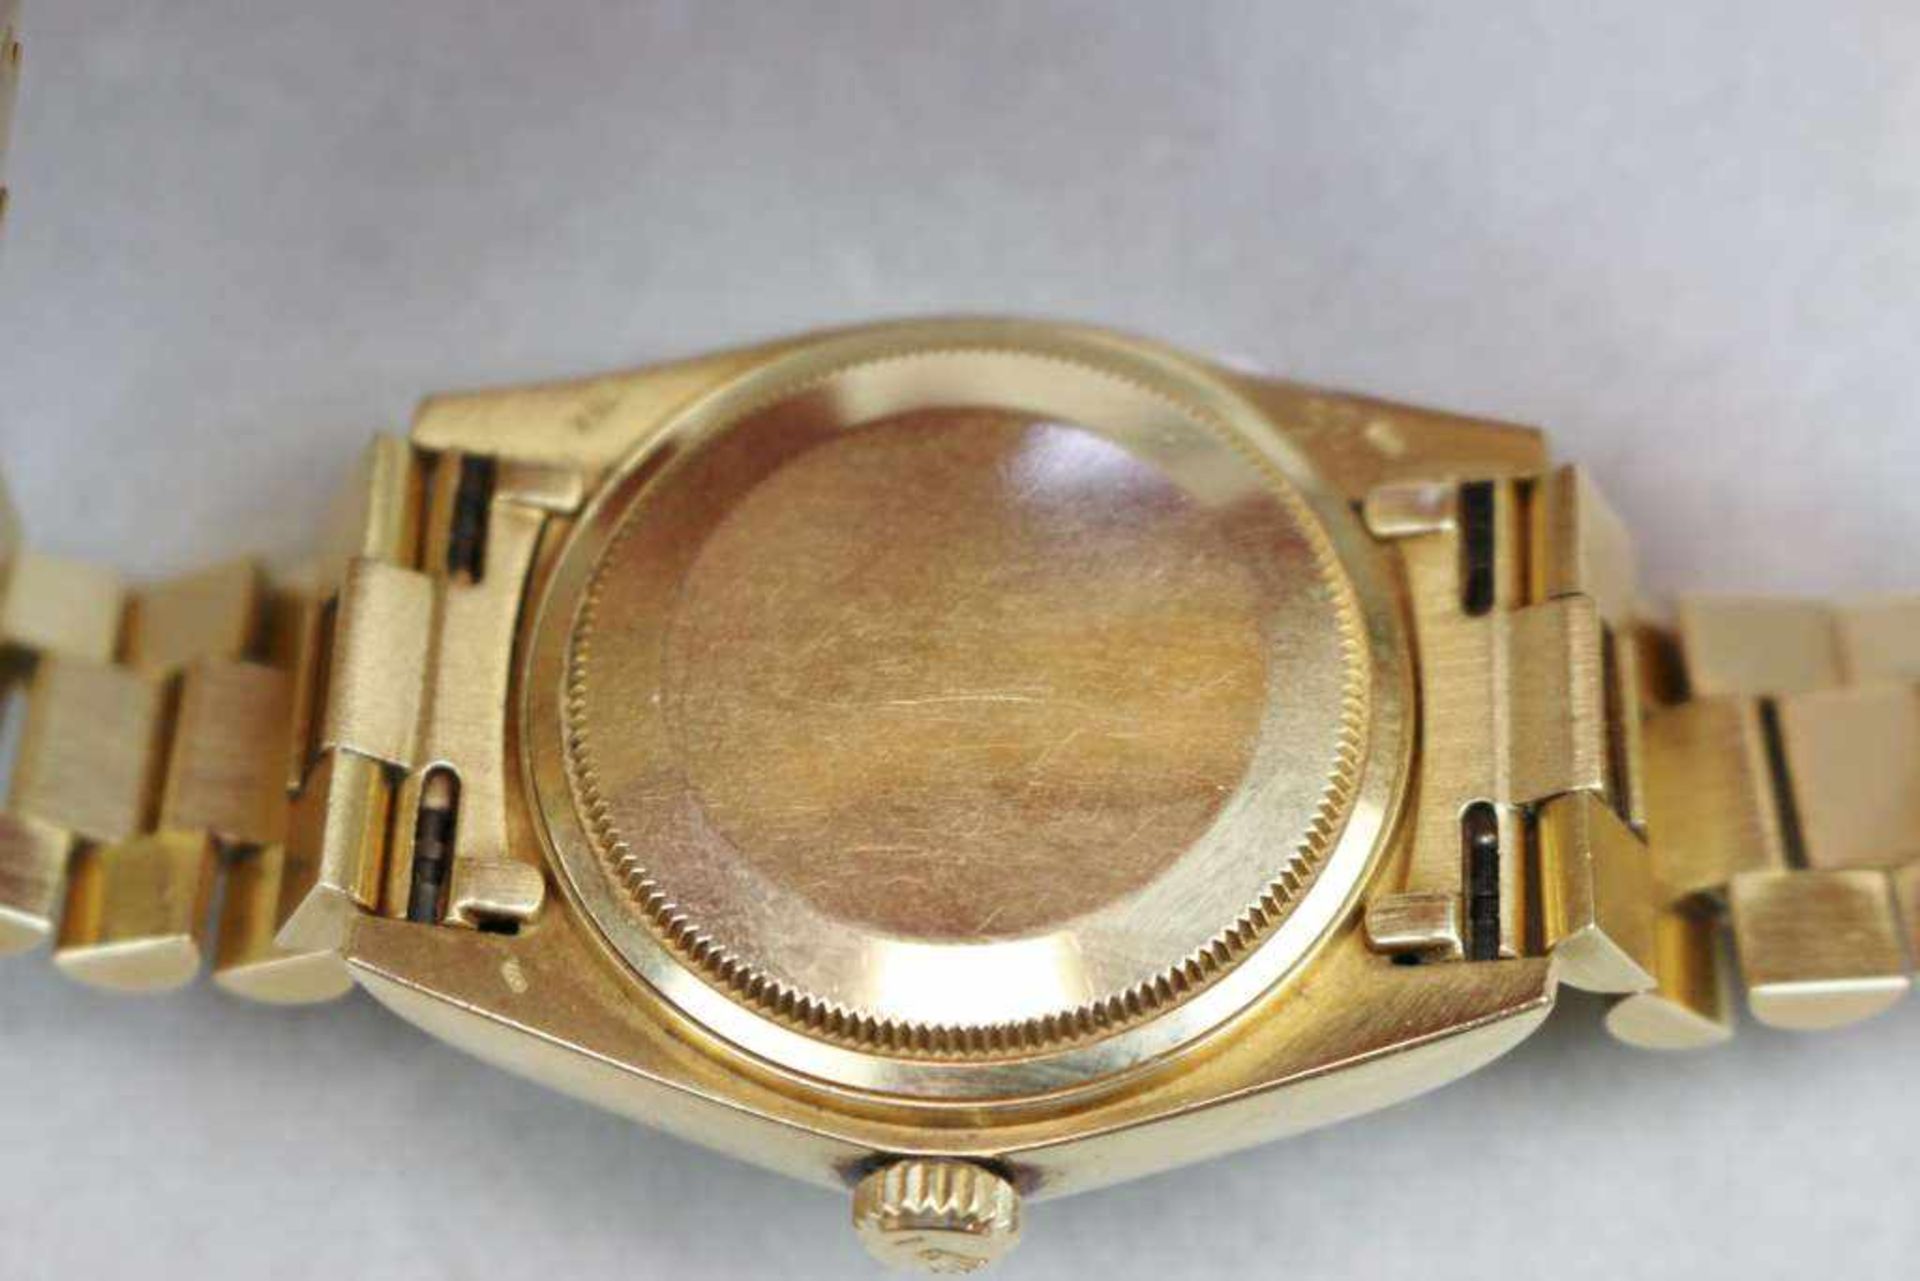 Rolex Herrenarmbanduhr "Oyster Perpetual Day-Date" mit champagnerfarbenem Diamant-Zifferblatt, - Bild 5 aus 8